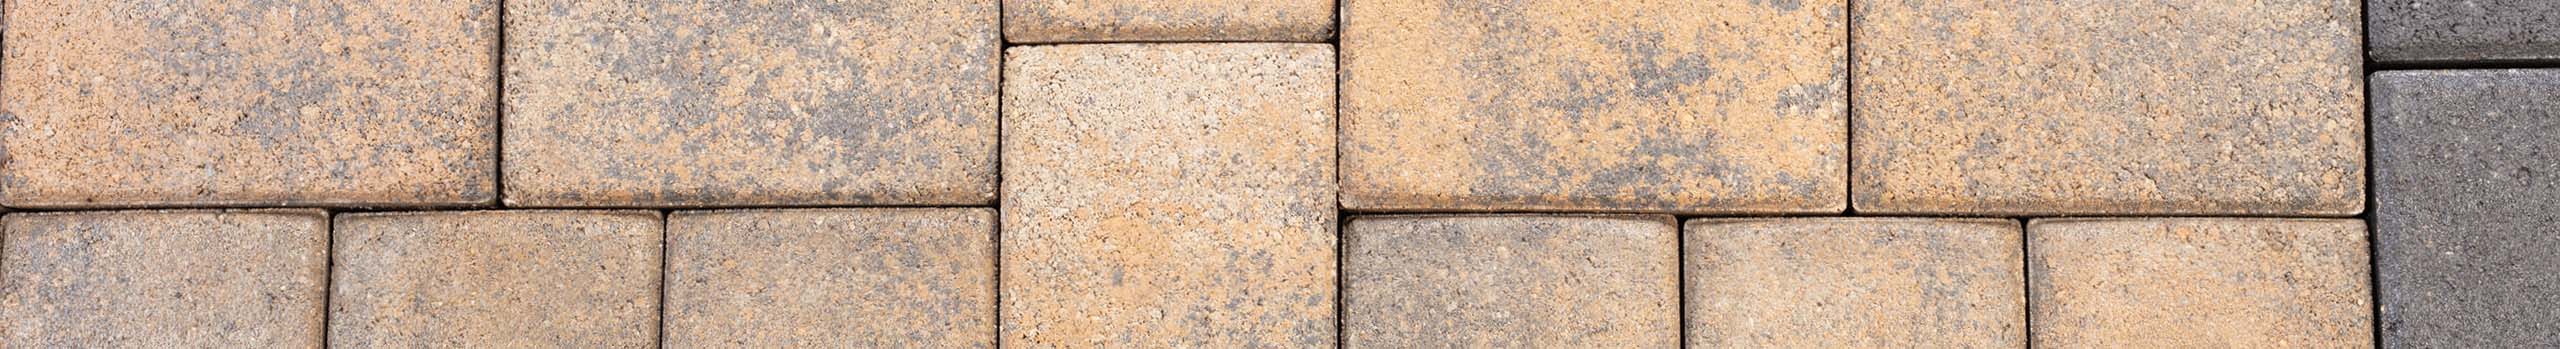 brick paver close up